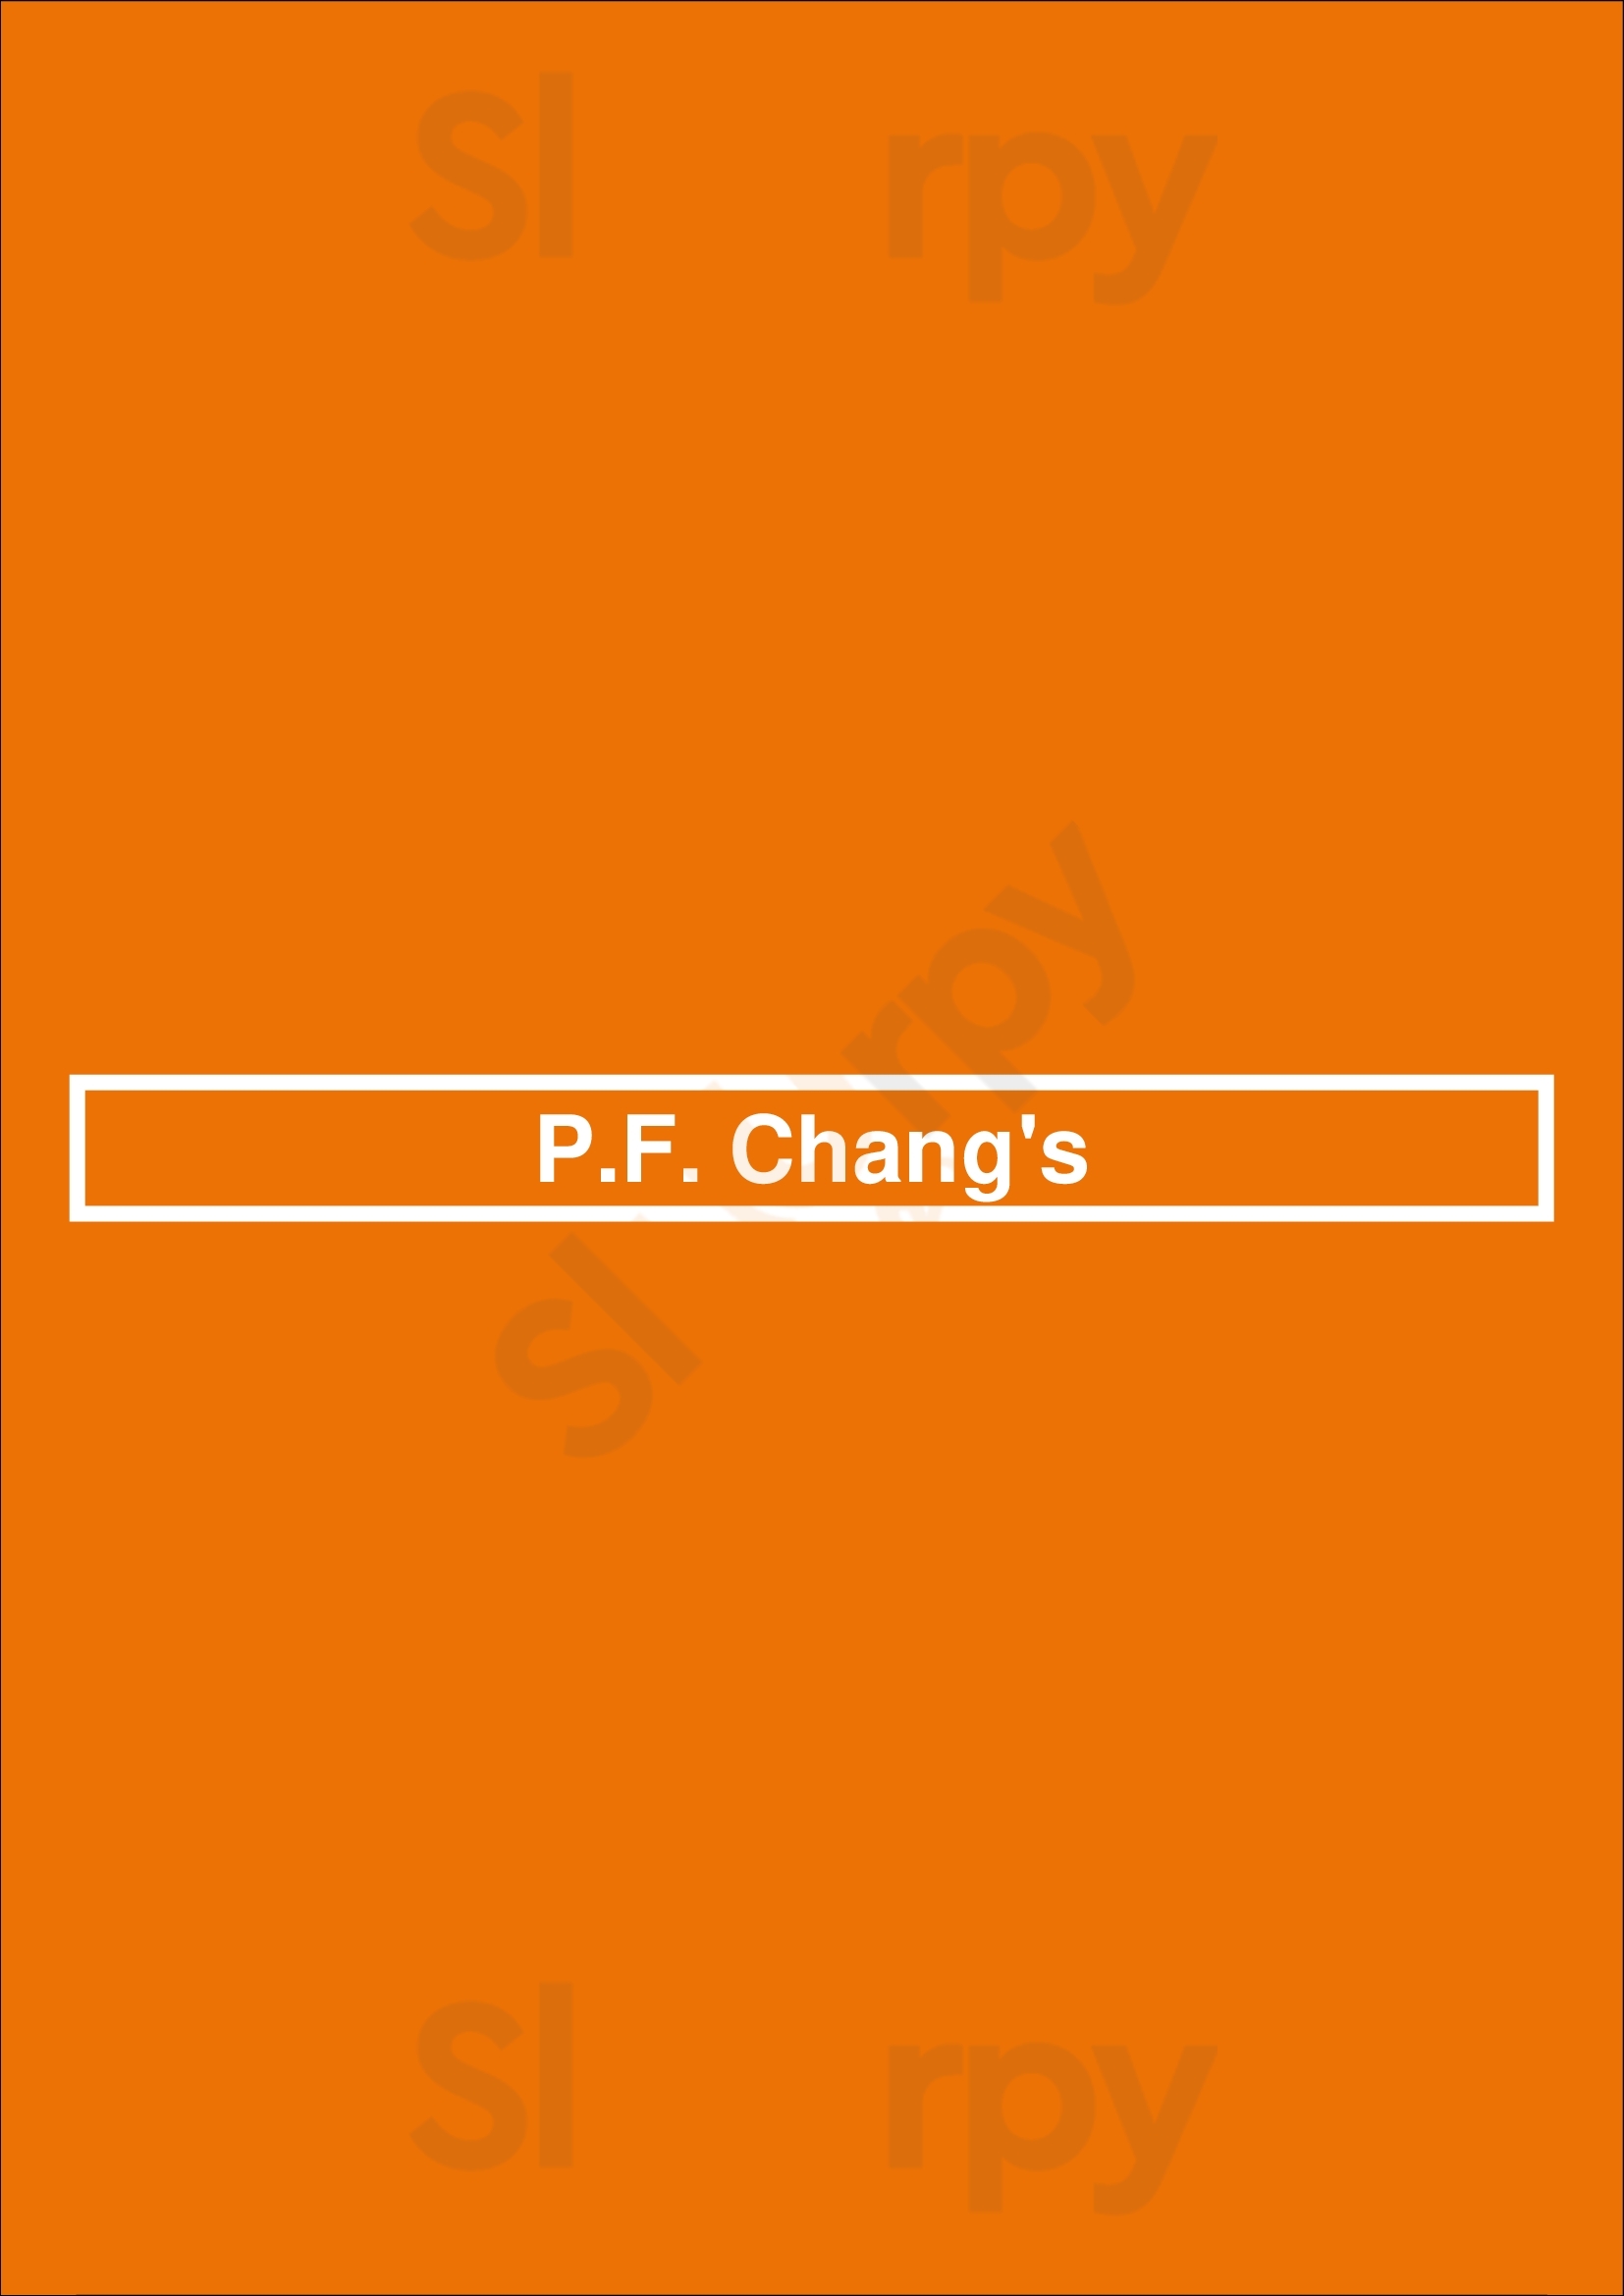 P.f. Chang's San Antonio Menu - 1